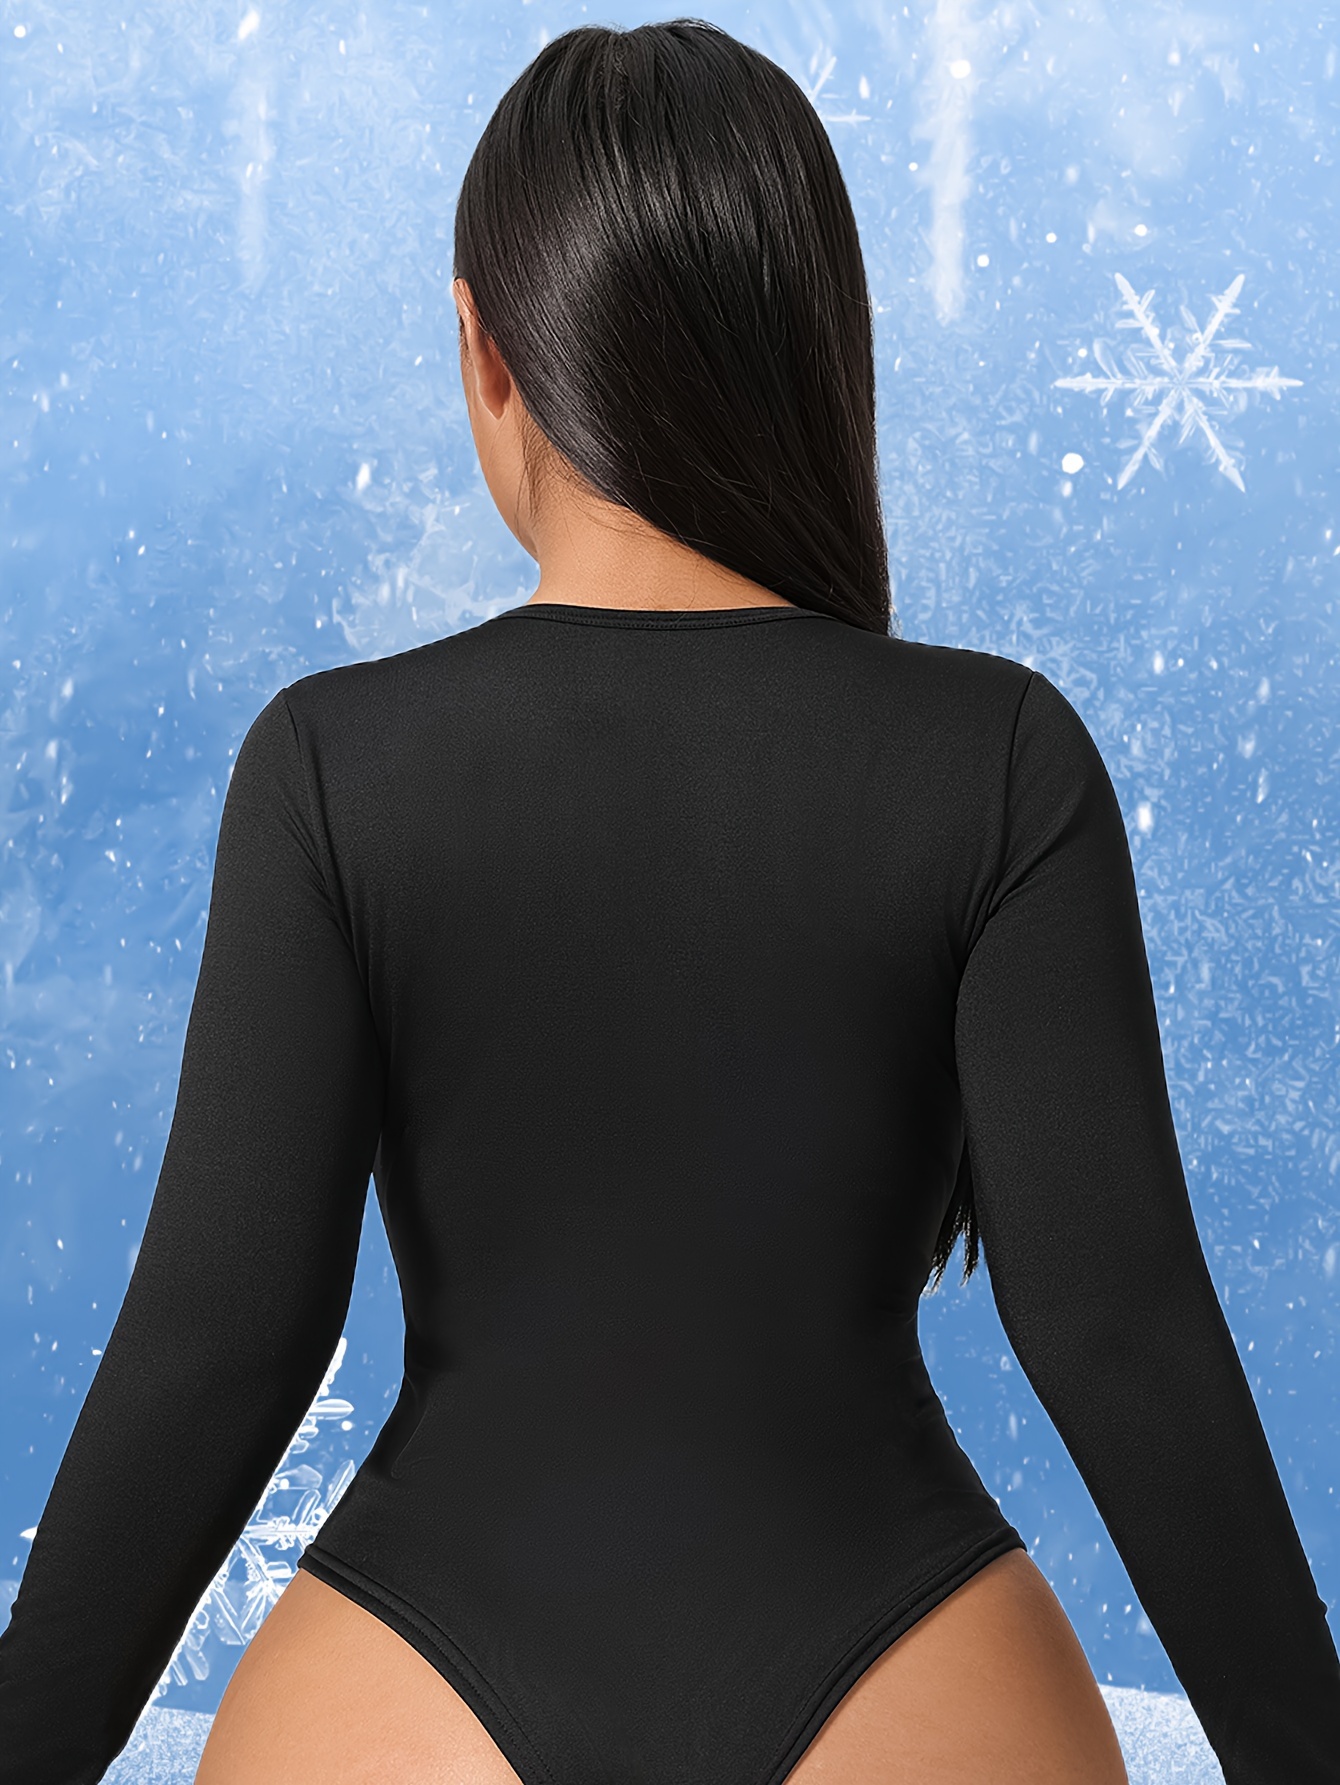 Black thermal bodysuit with fleece